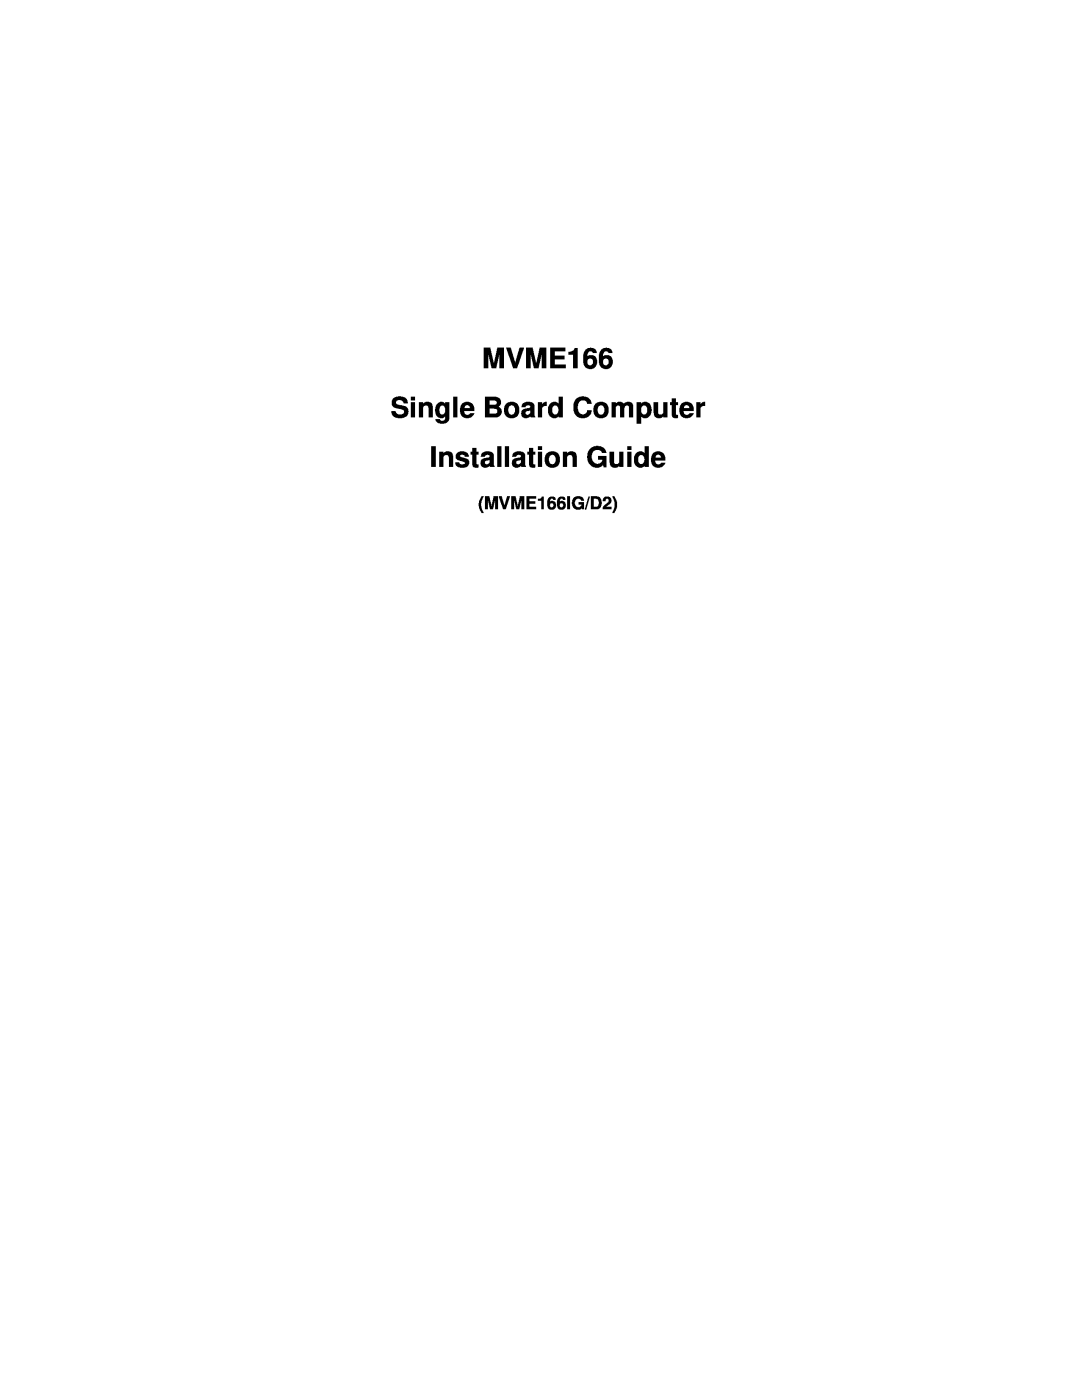 Motorola MVME166D2 manual MVME166IG/D2, MVME166 Single Board Computer Installation Guide 